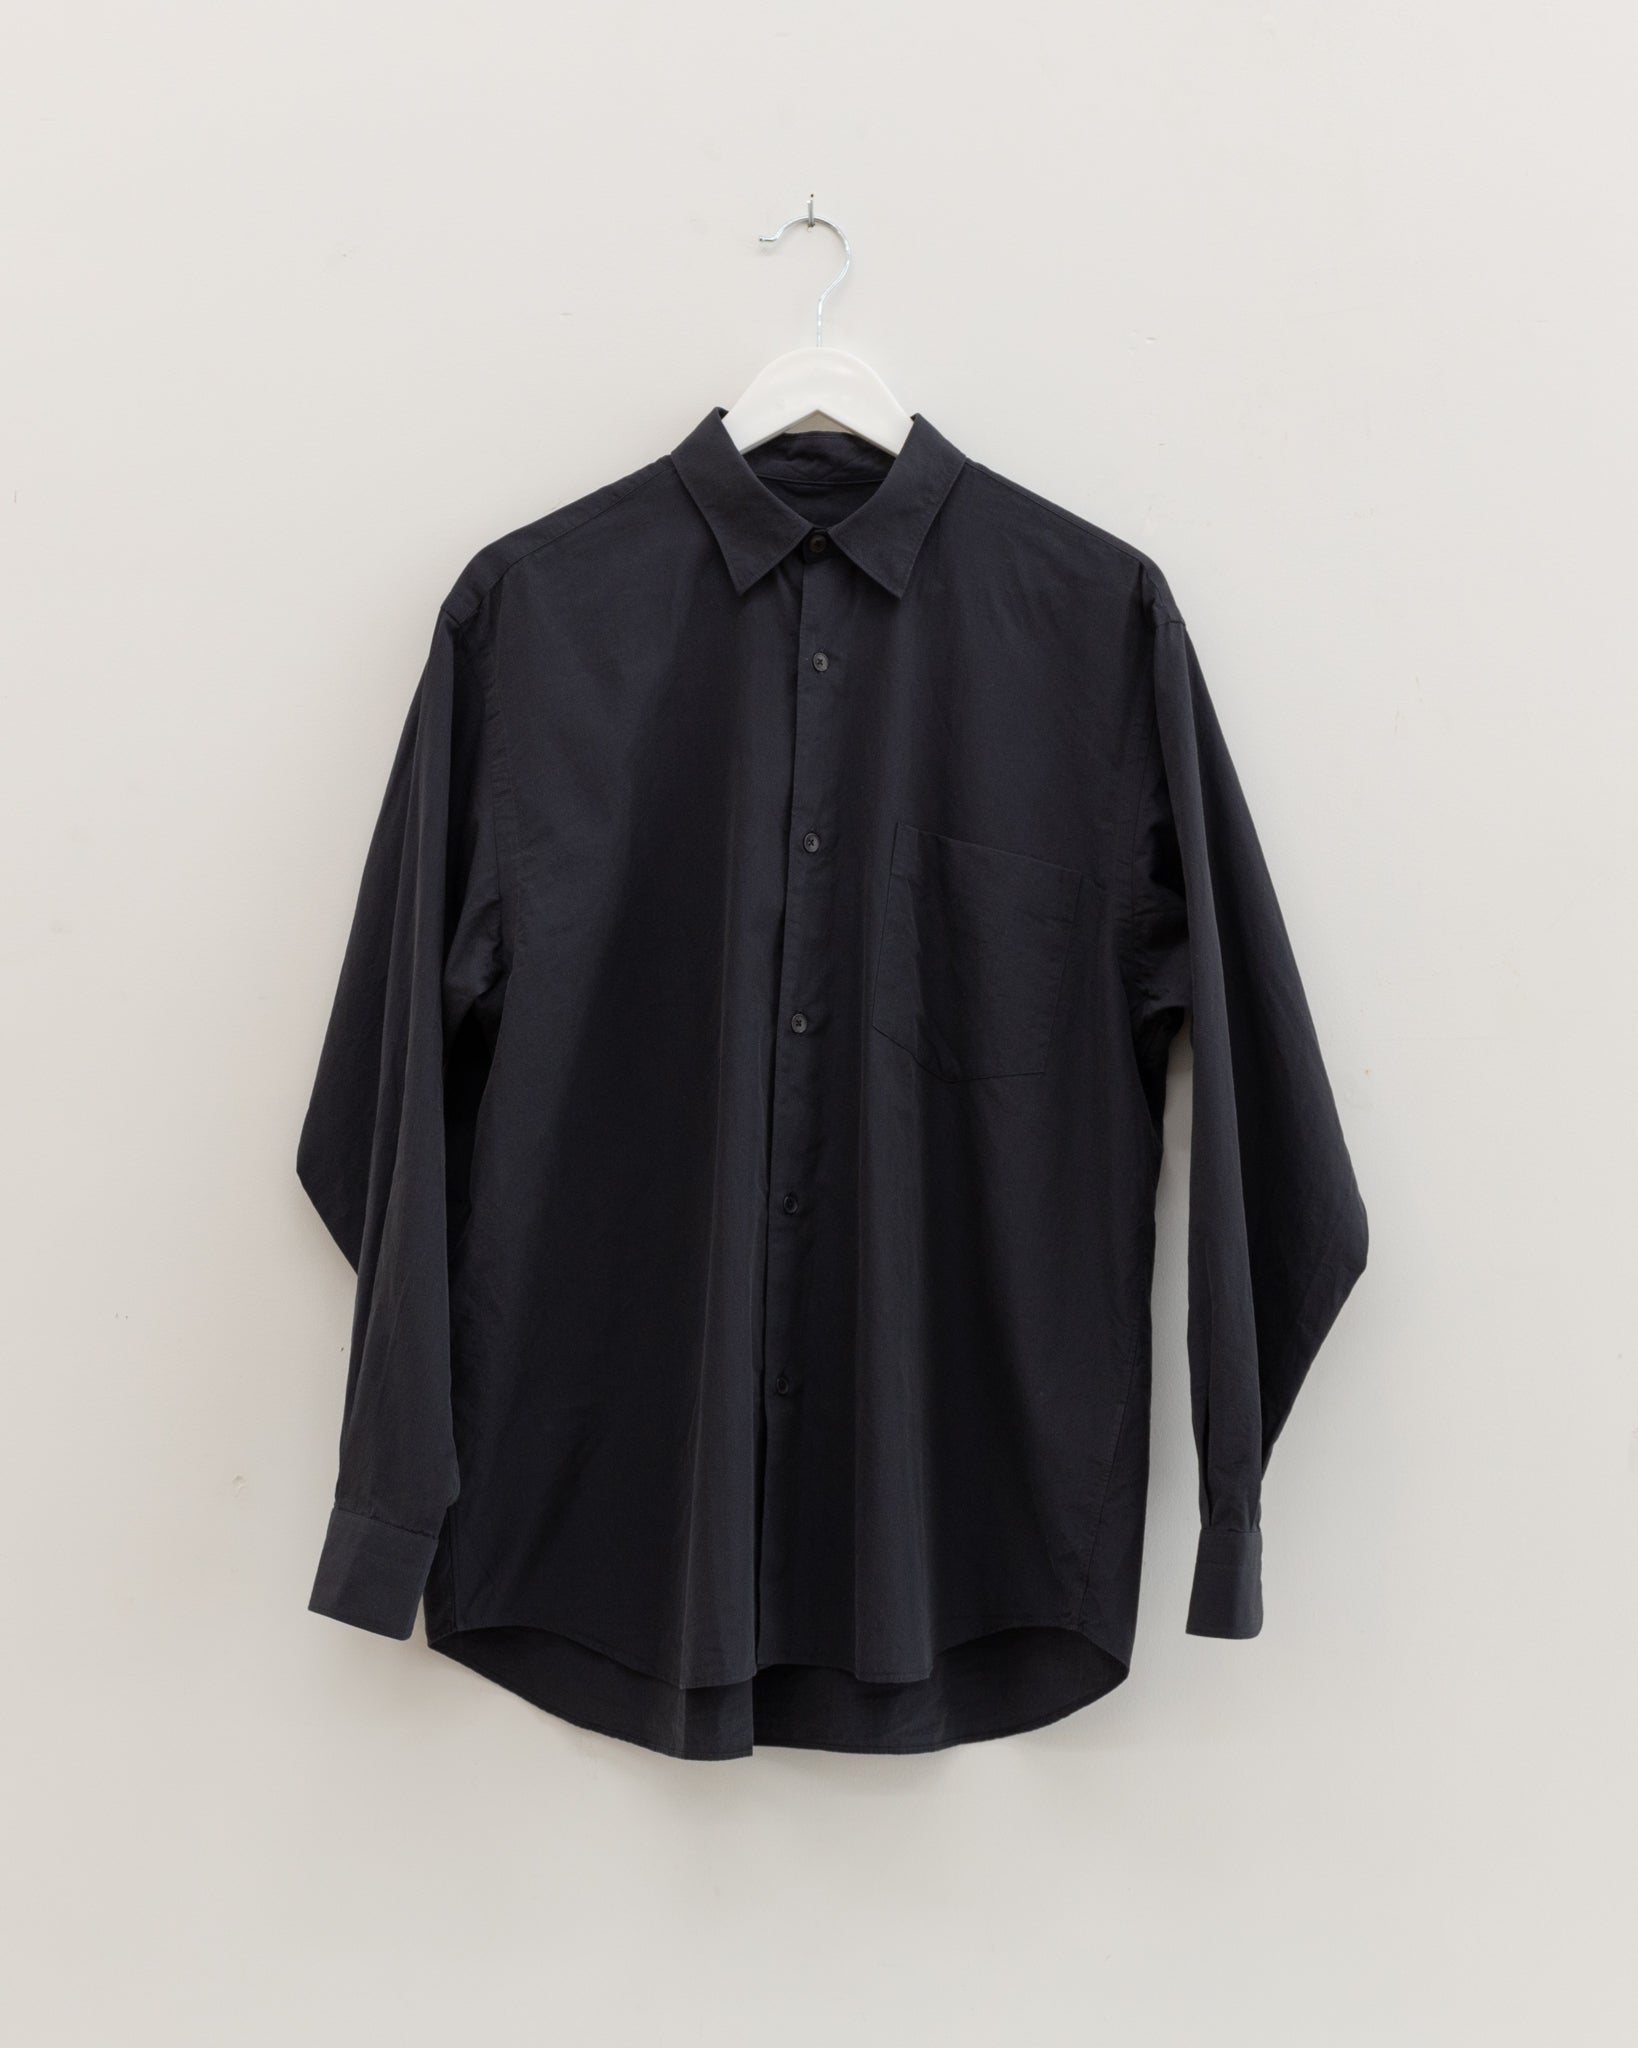 COMOLI Shirt Black size 4番号P01-02001